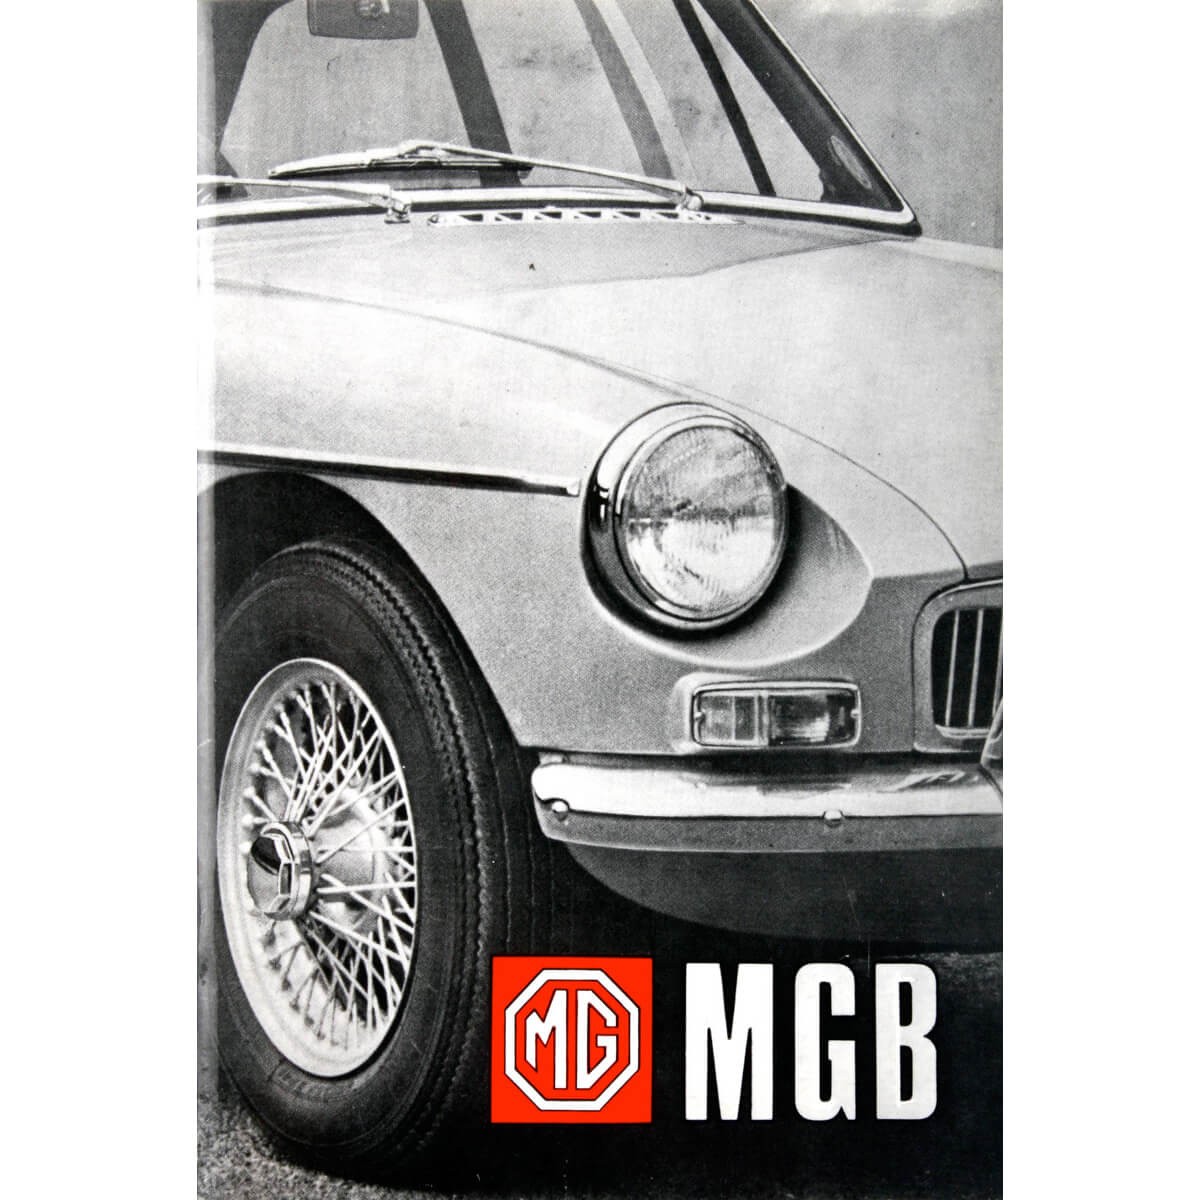 Mgb Owners Worshop Manual Download